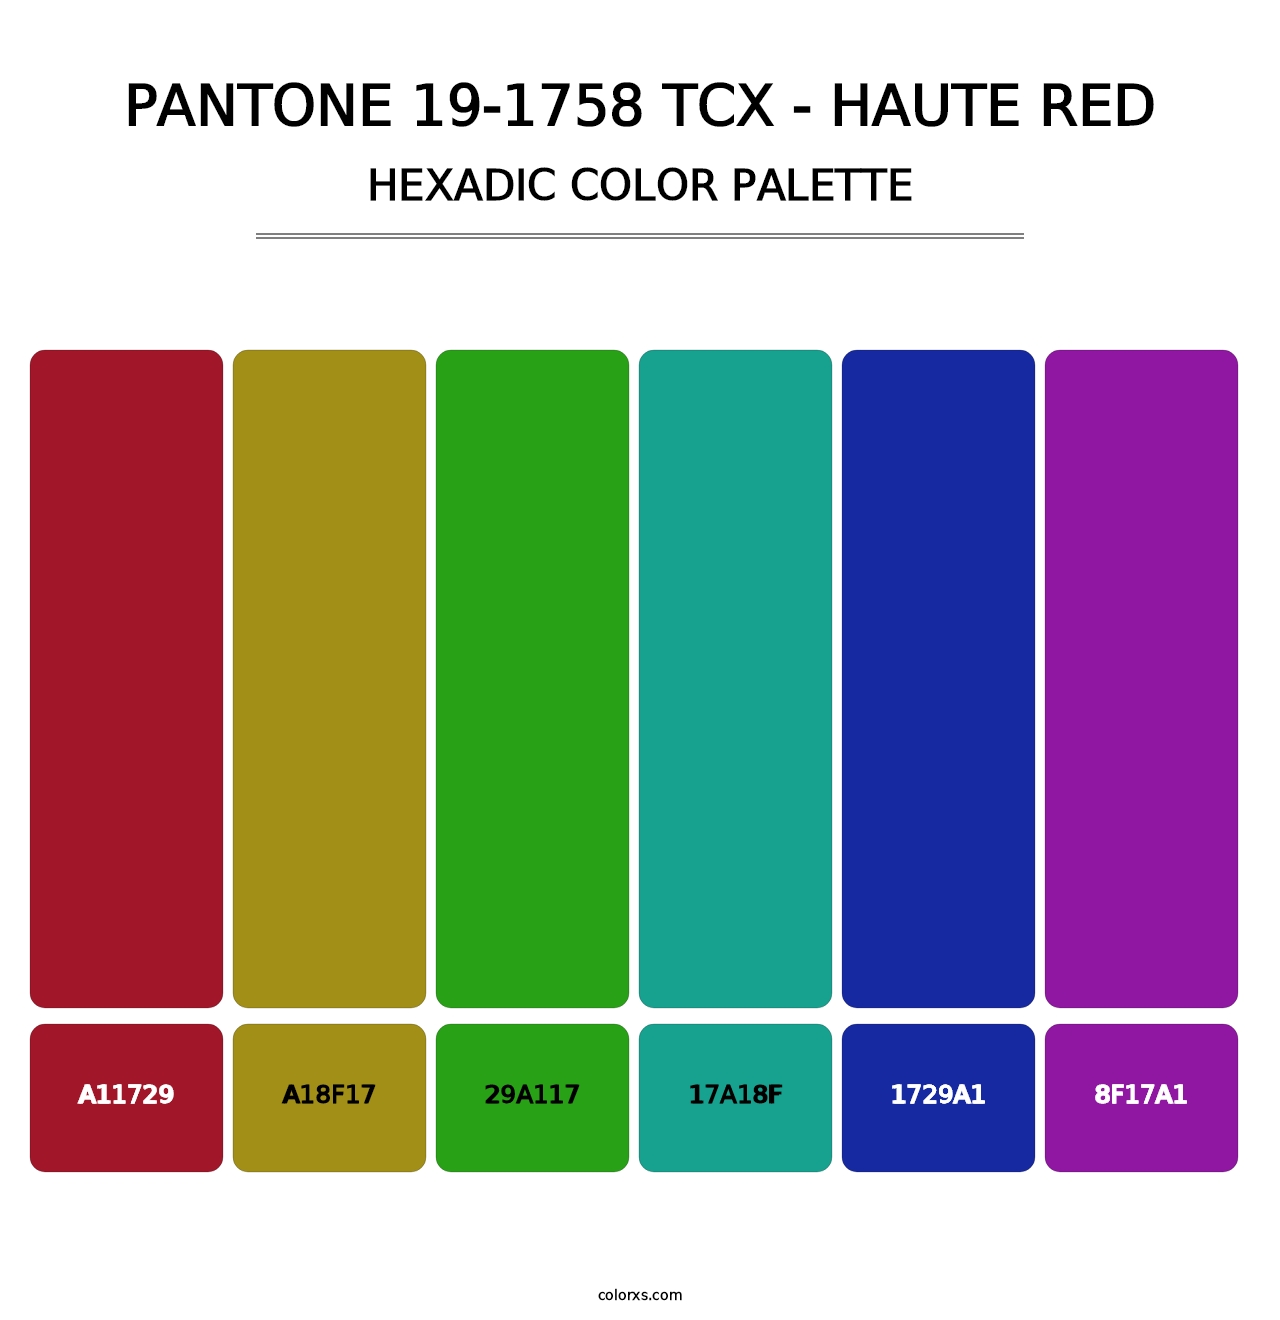 PANTONE 19-1758 TCX - Haute Red - Hexadic Color Palette